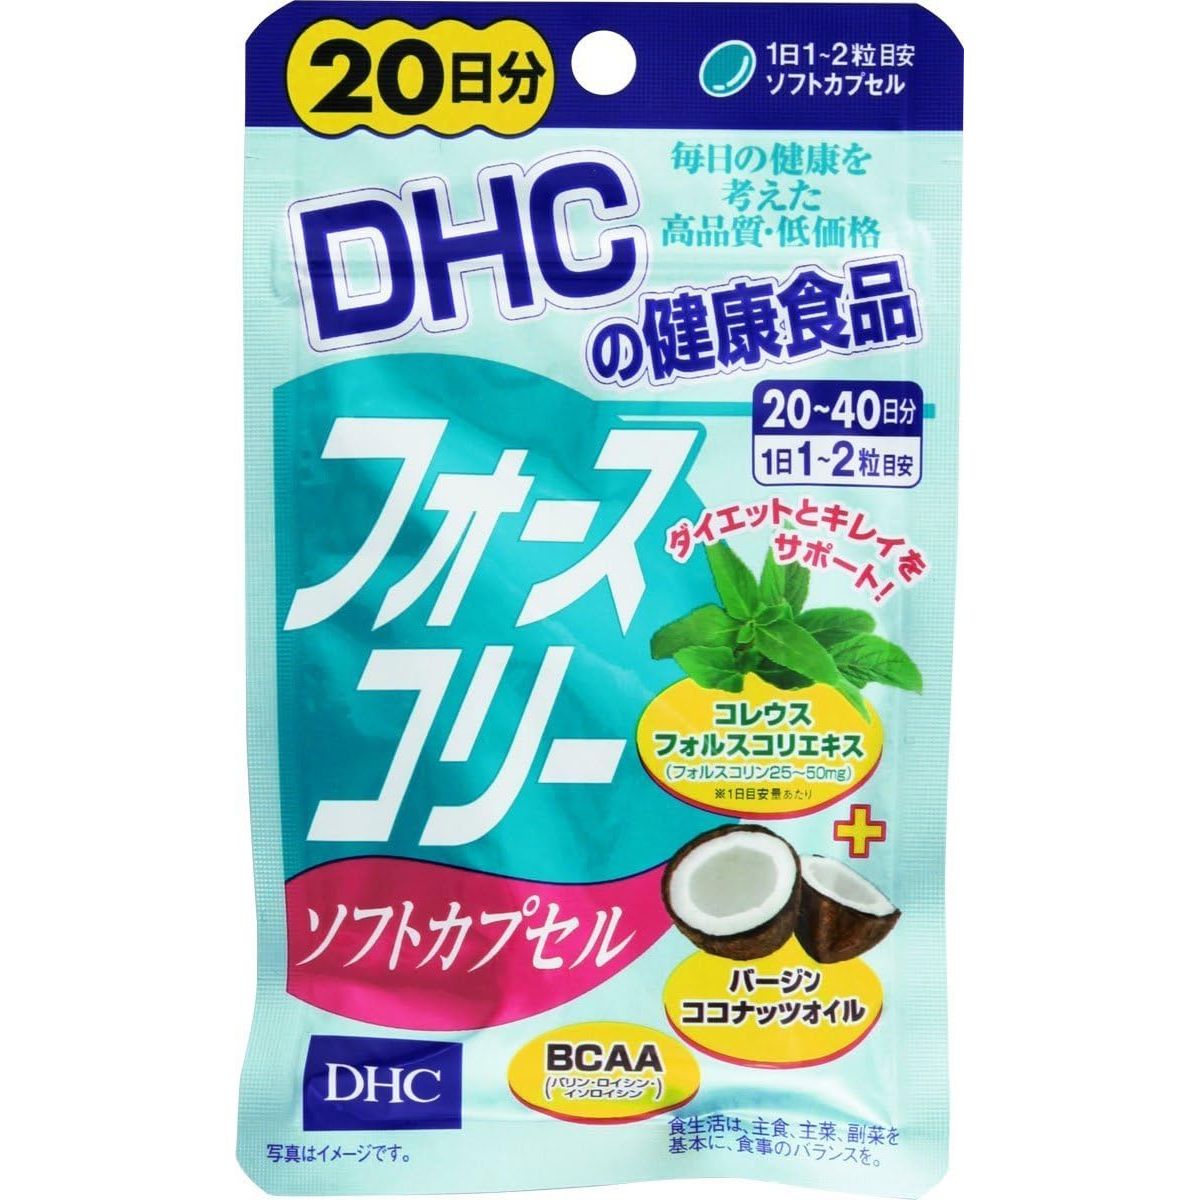 DHC 毛喉素椰子油軟膠囊 魔力因子消脂減肥 - 小熊藥妝 - 日本藥妝直送台灣